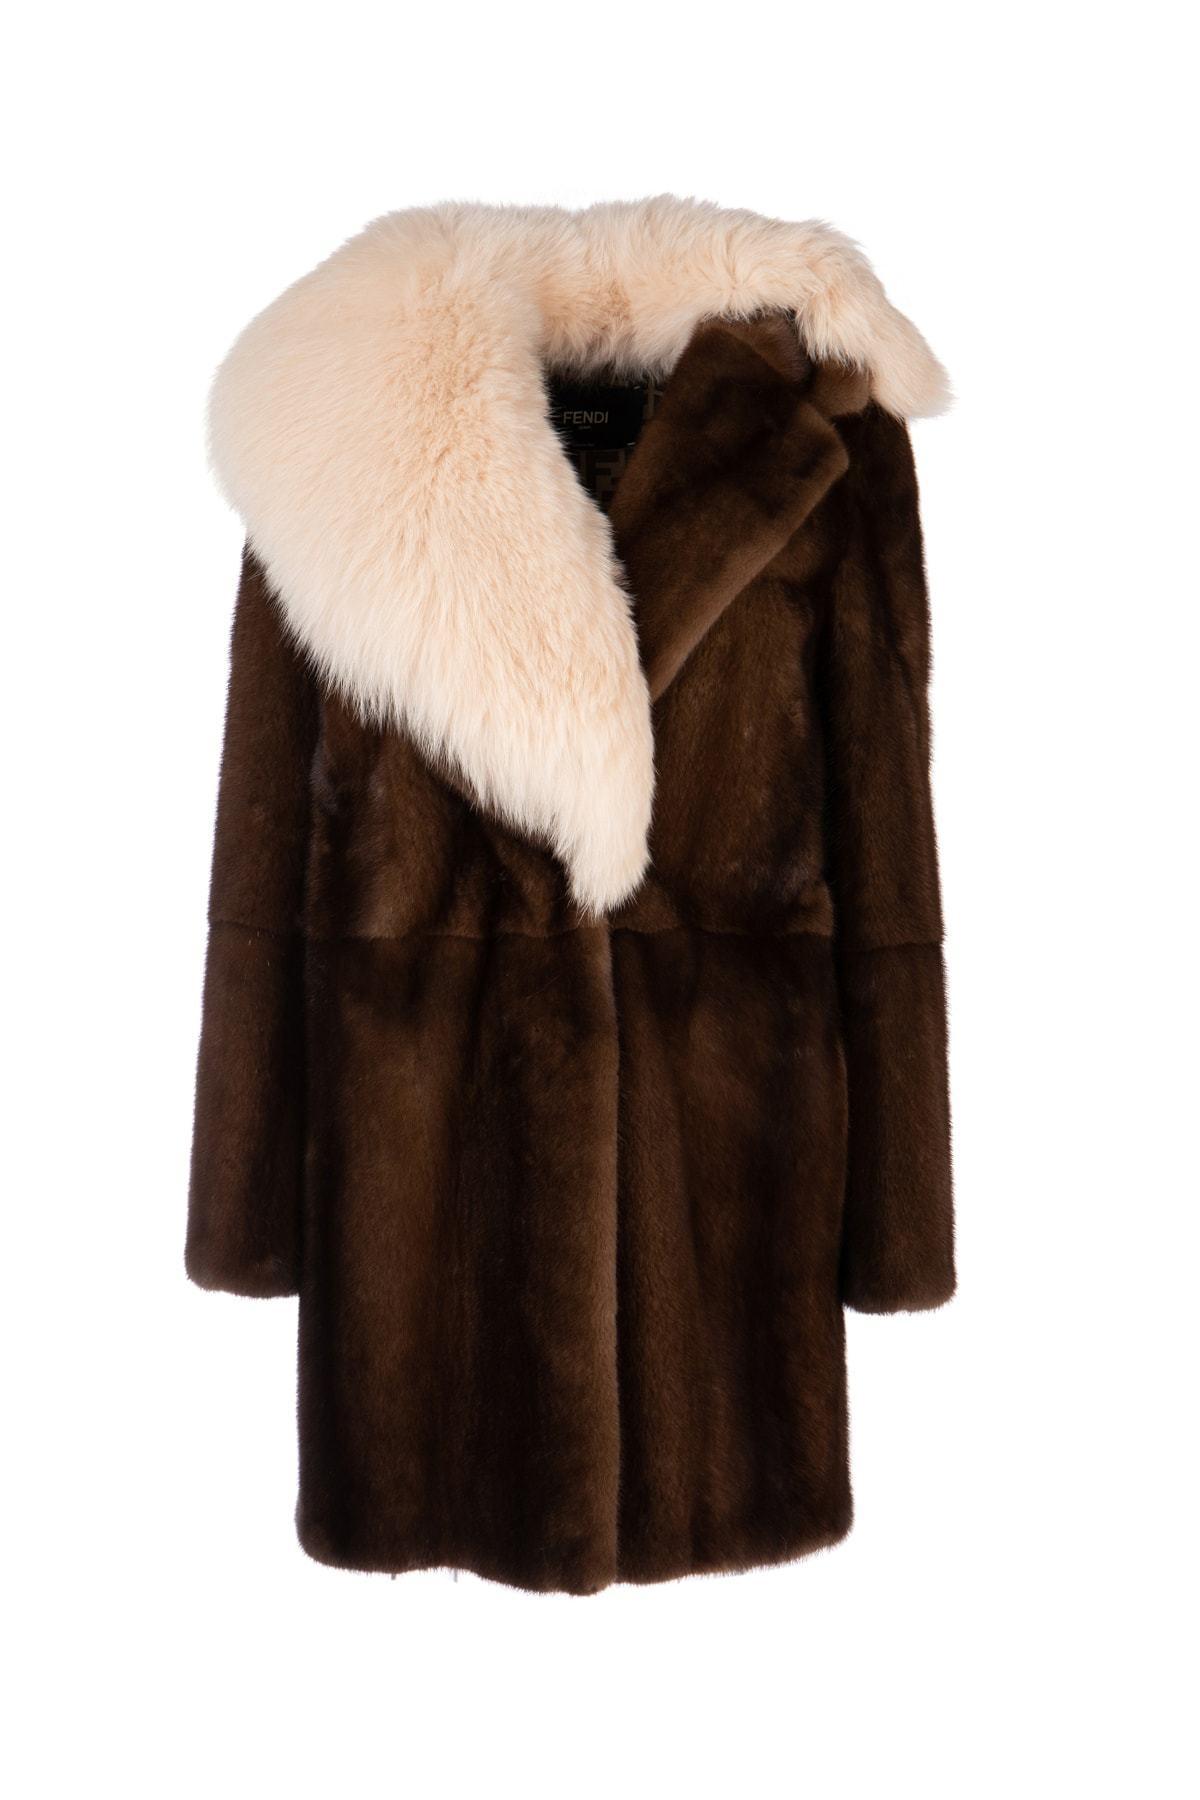 Fendi Asymmetric Fur Coat in Brown - Lyst